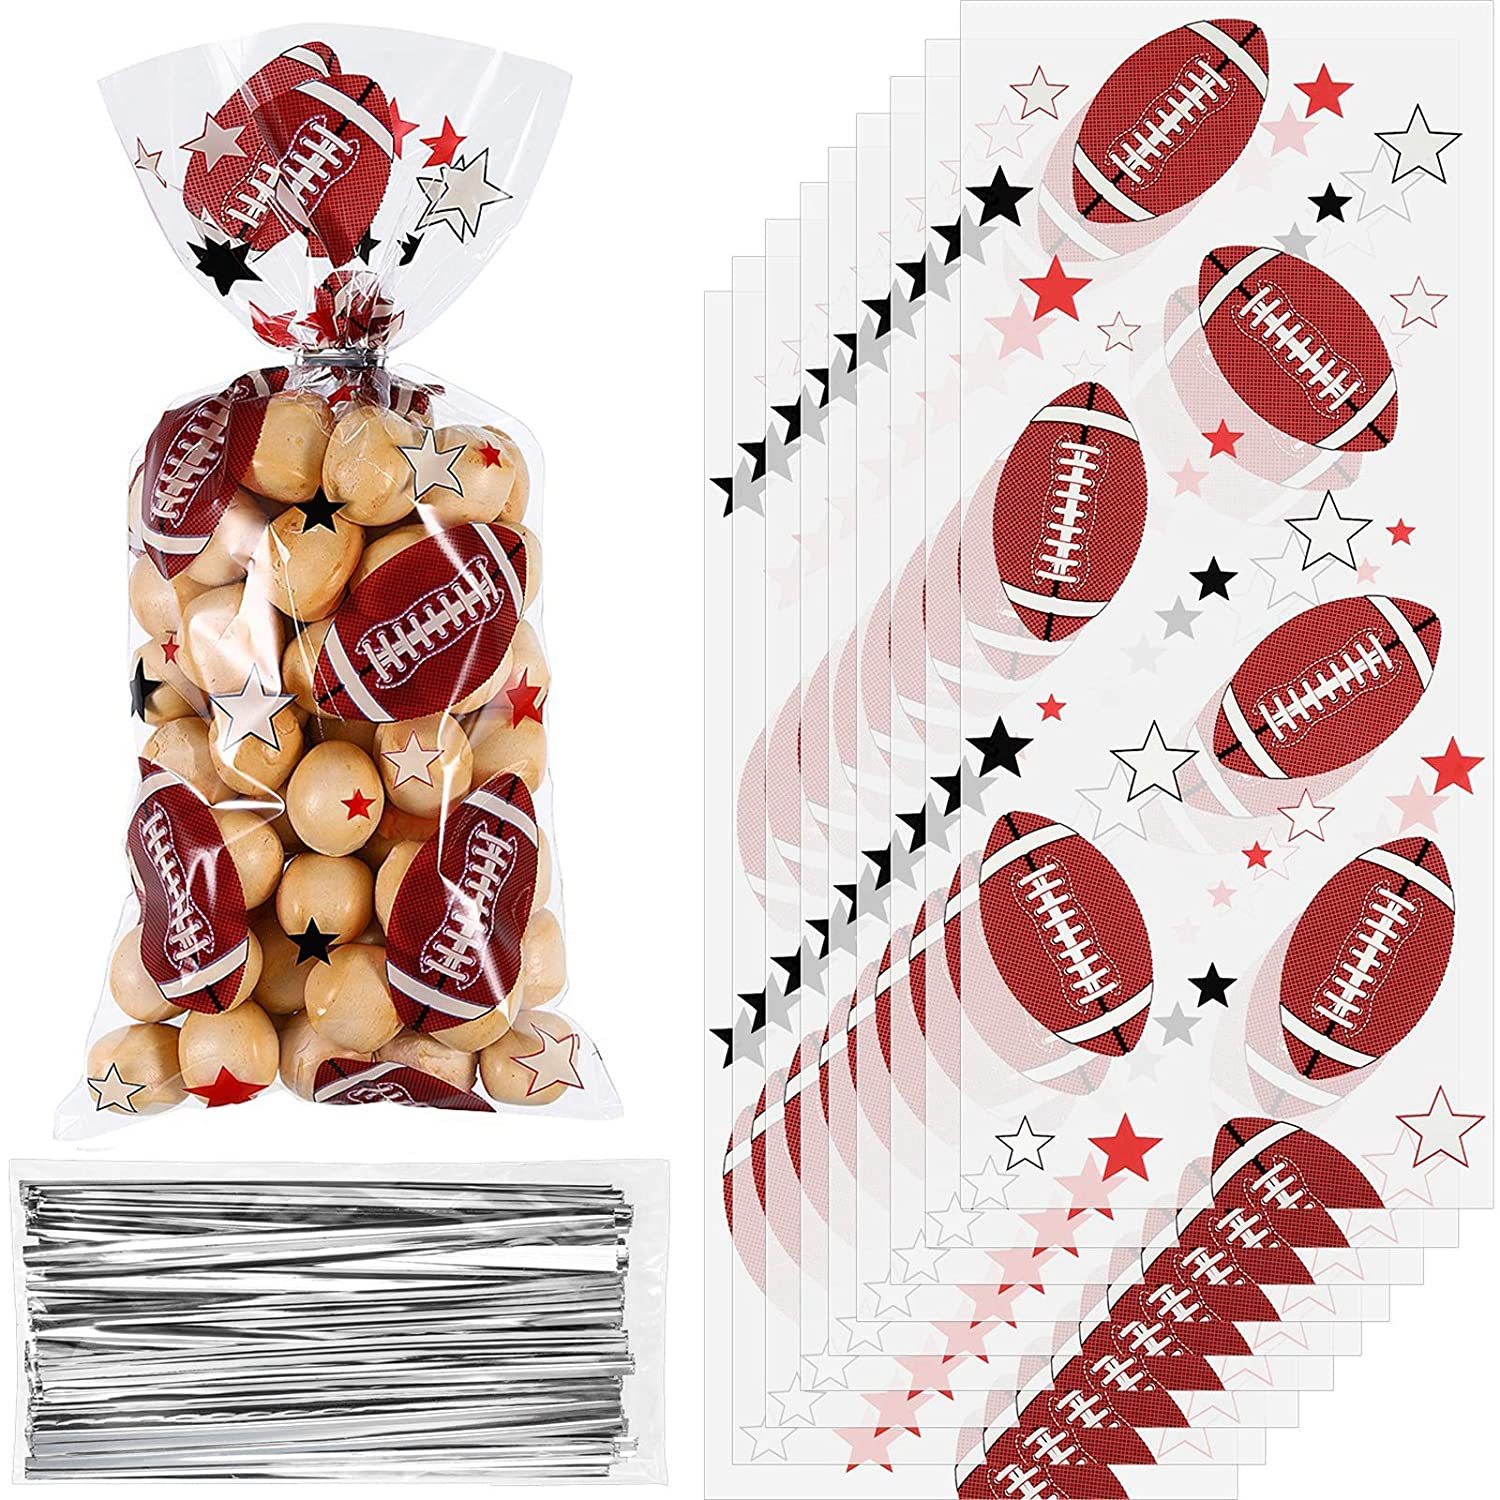 100 Pieces Football Cellophane Bags Heat Sealable Treat Football Candy